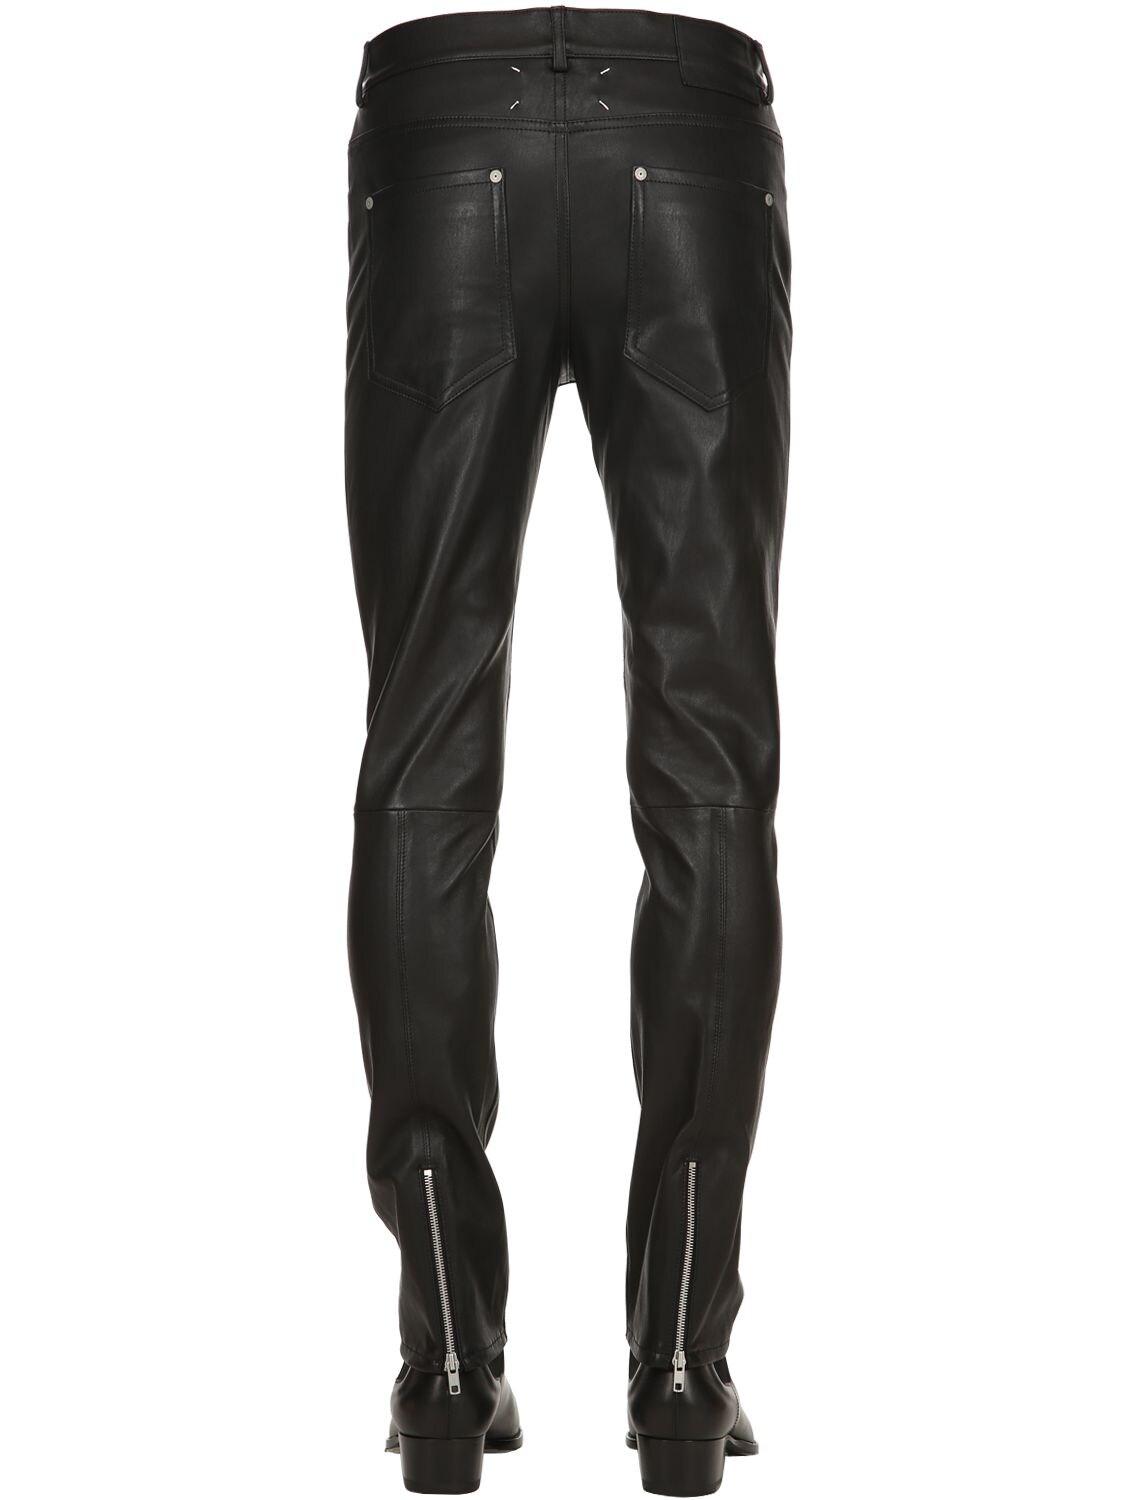 Maison Margiela Leather Pants in Black for Men - Lyst